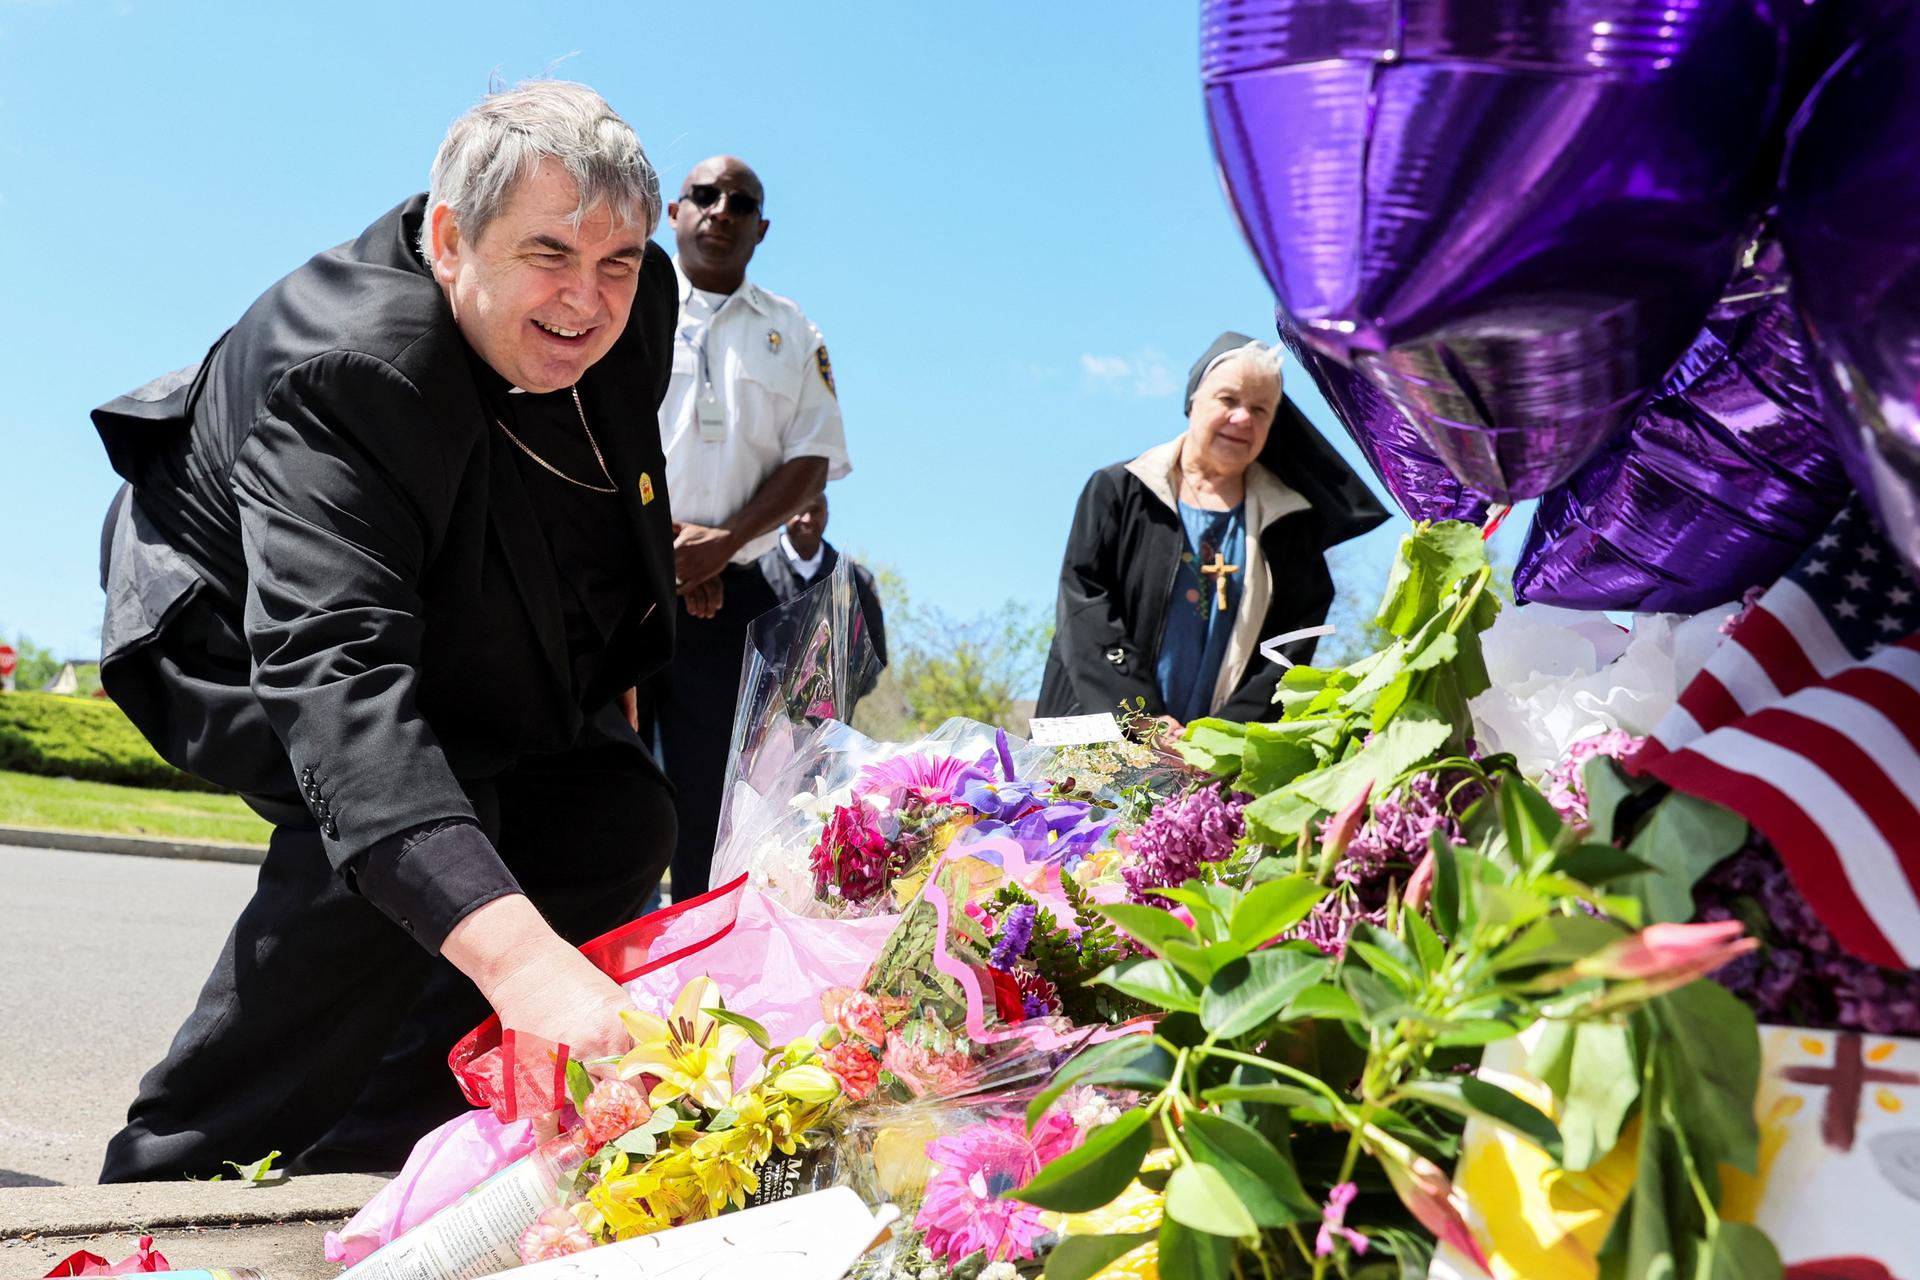 Buffalo bishop lays flowers, personal prayer at mass shooting memorial